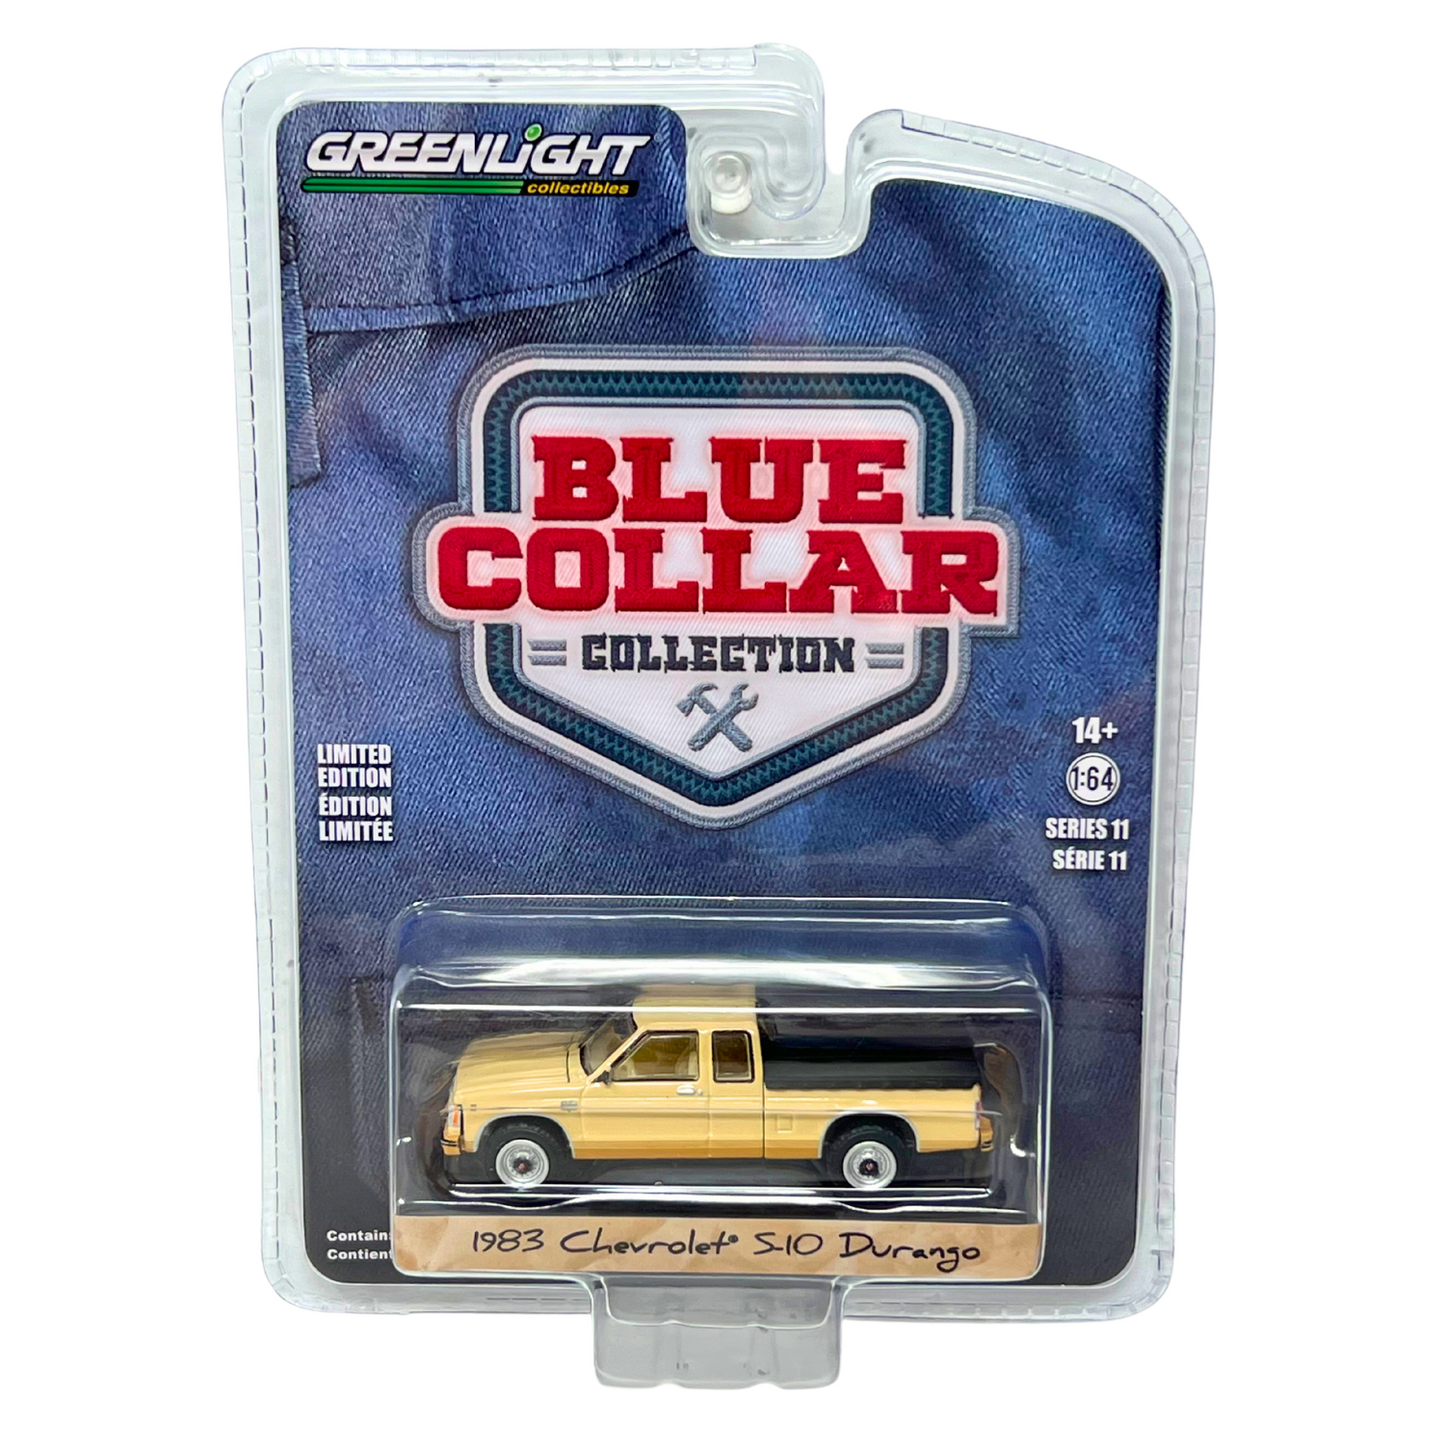 Greenlight Blue Collar 1983 Chevrolet S10 Durango 1:64 Diecast